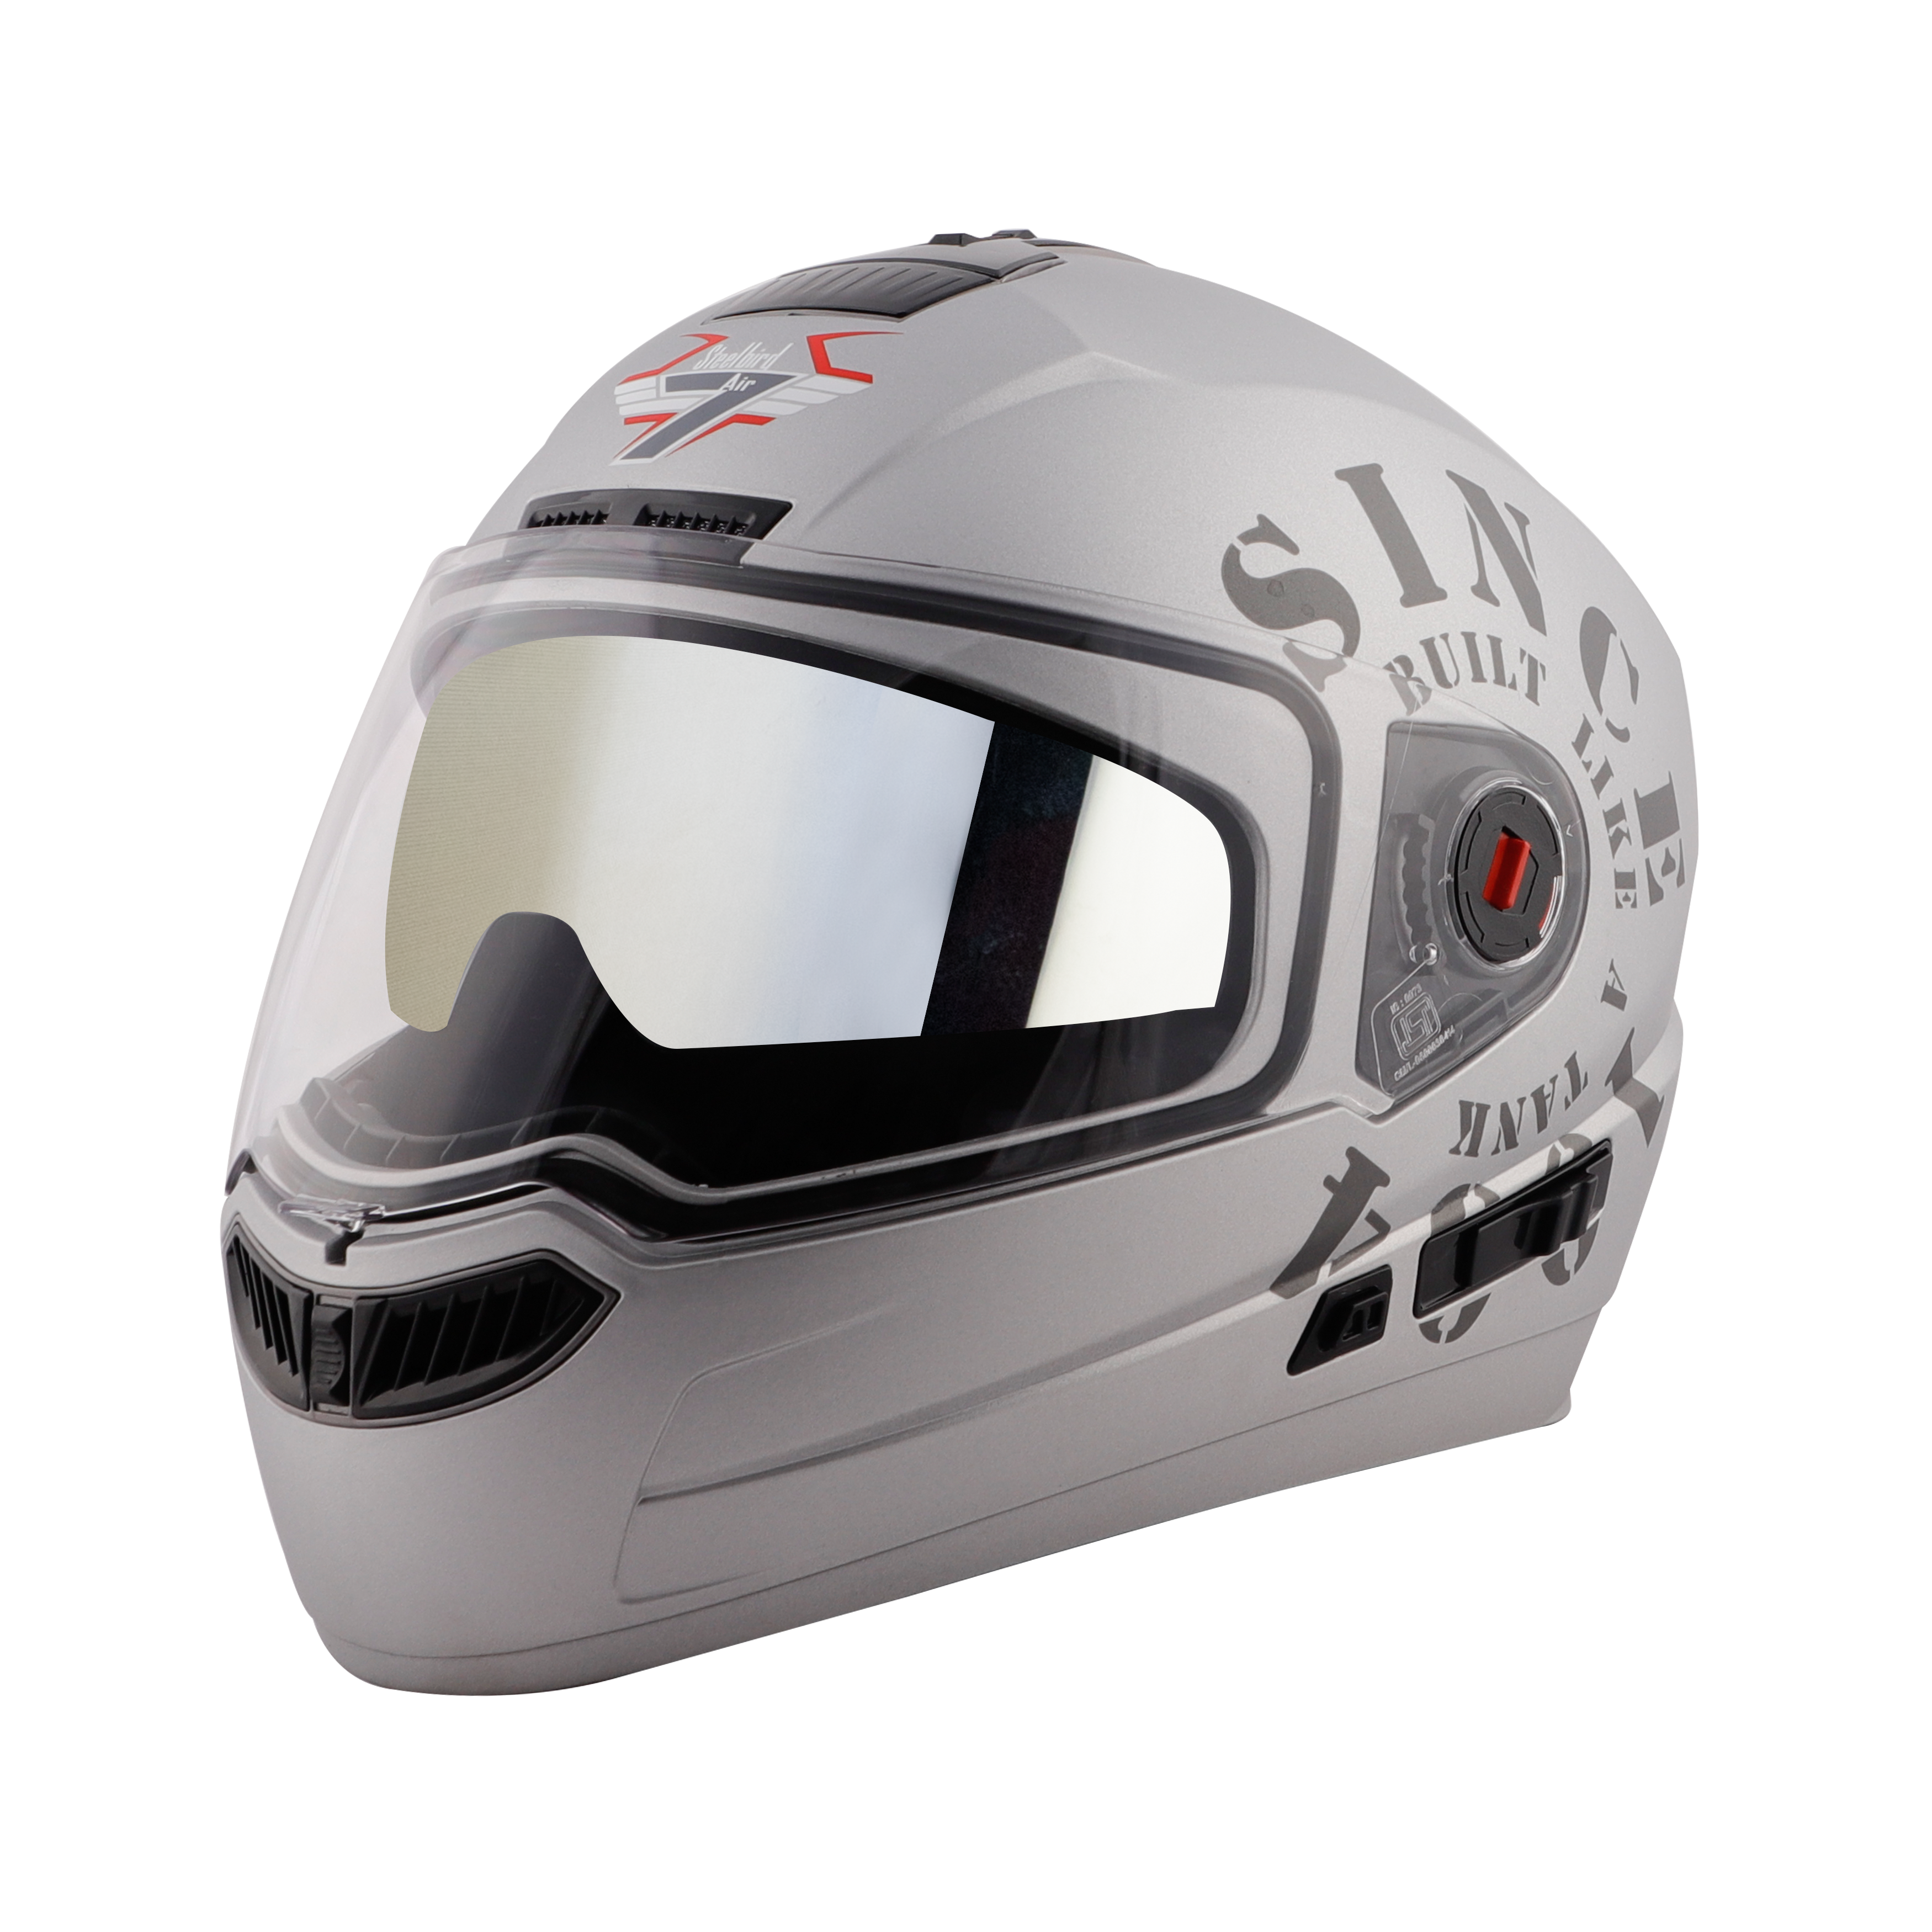 Steelbird SBA-1 Tank Double Visor Full Face Graphics Helmet, Inner Silver Sun Shield and Outer Clear Visor (Matt Silver Grey)